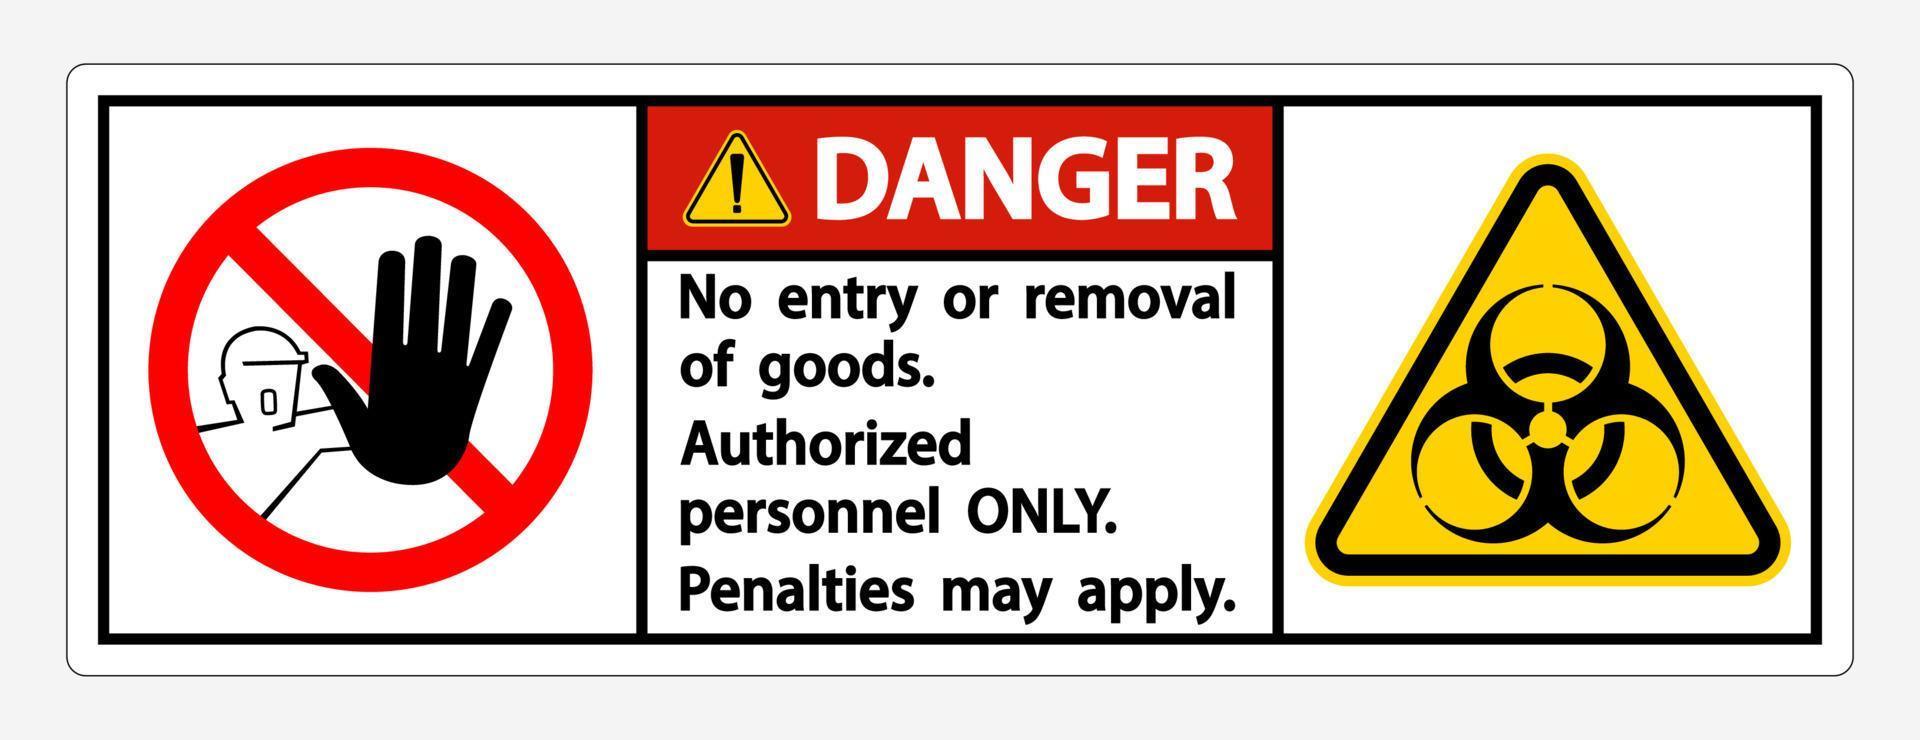 Danger quarantaine holding area sign isolé sur fond blanc, vector illustration eps.10